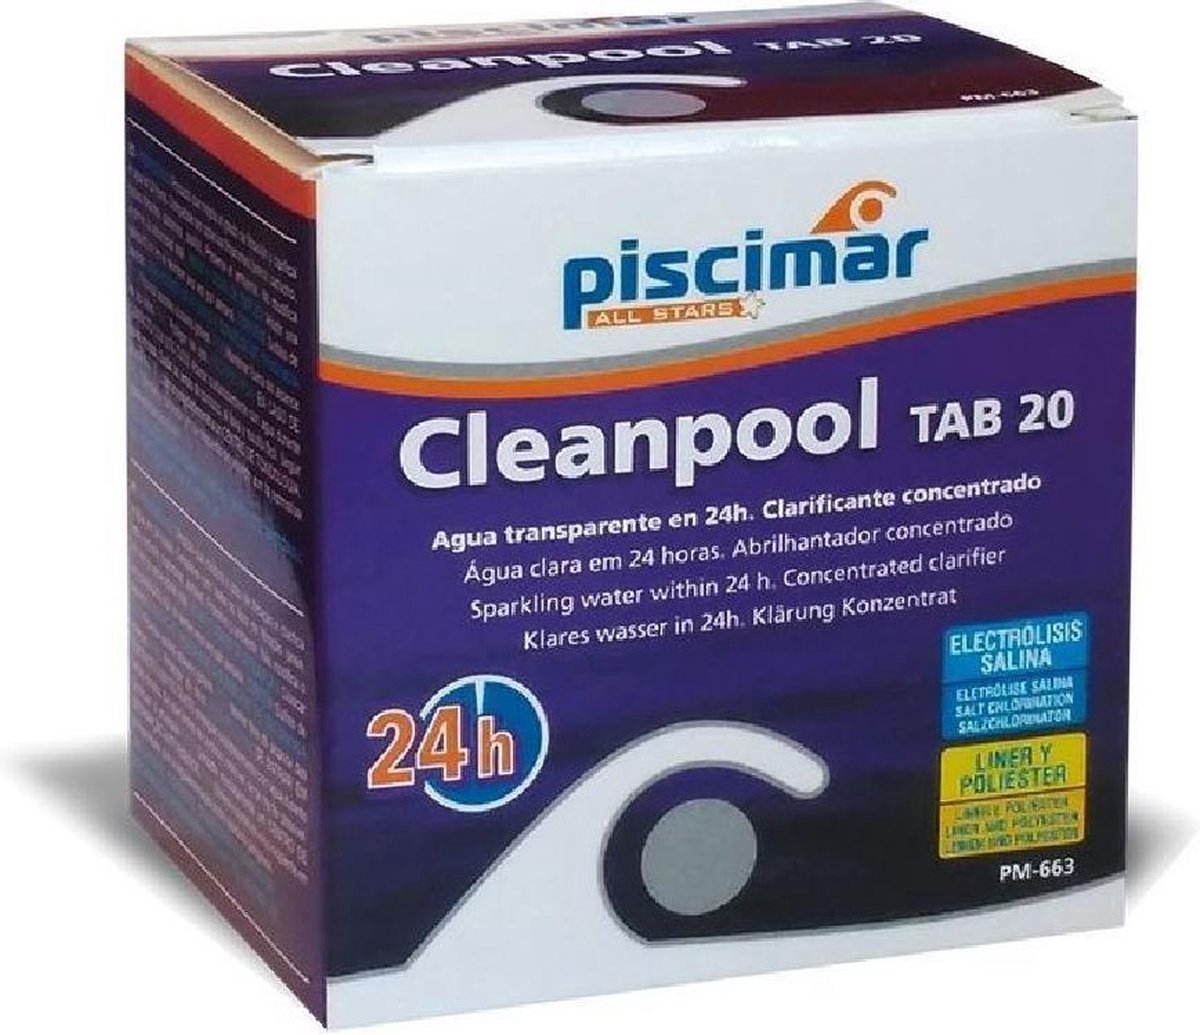 Clean Pool tabs - Piscimar (PM-663)